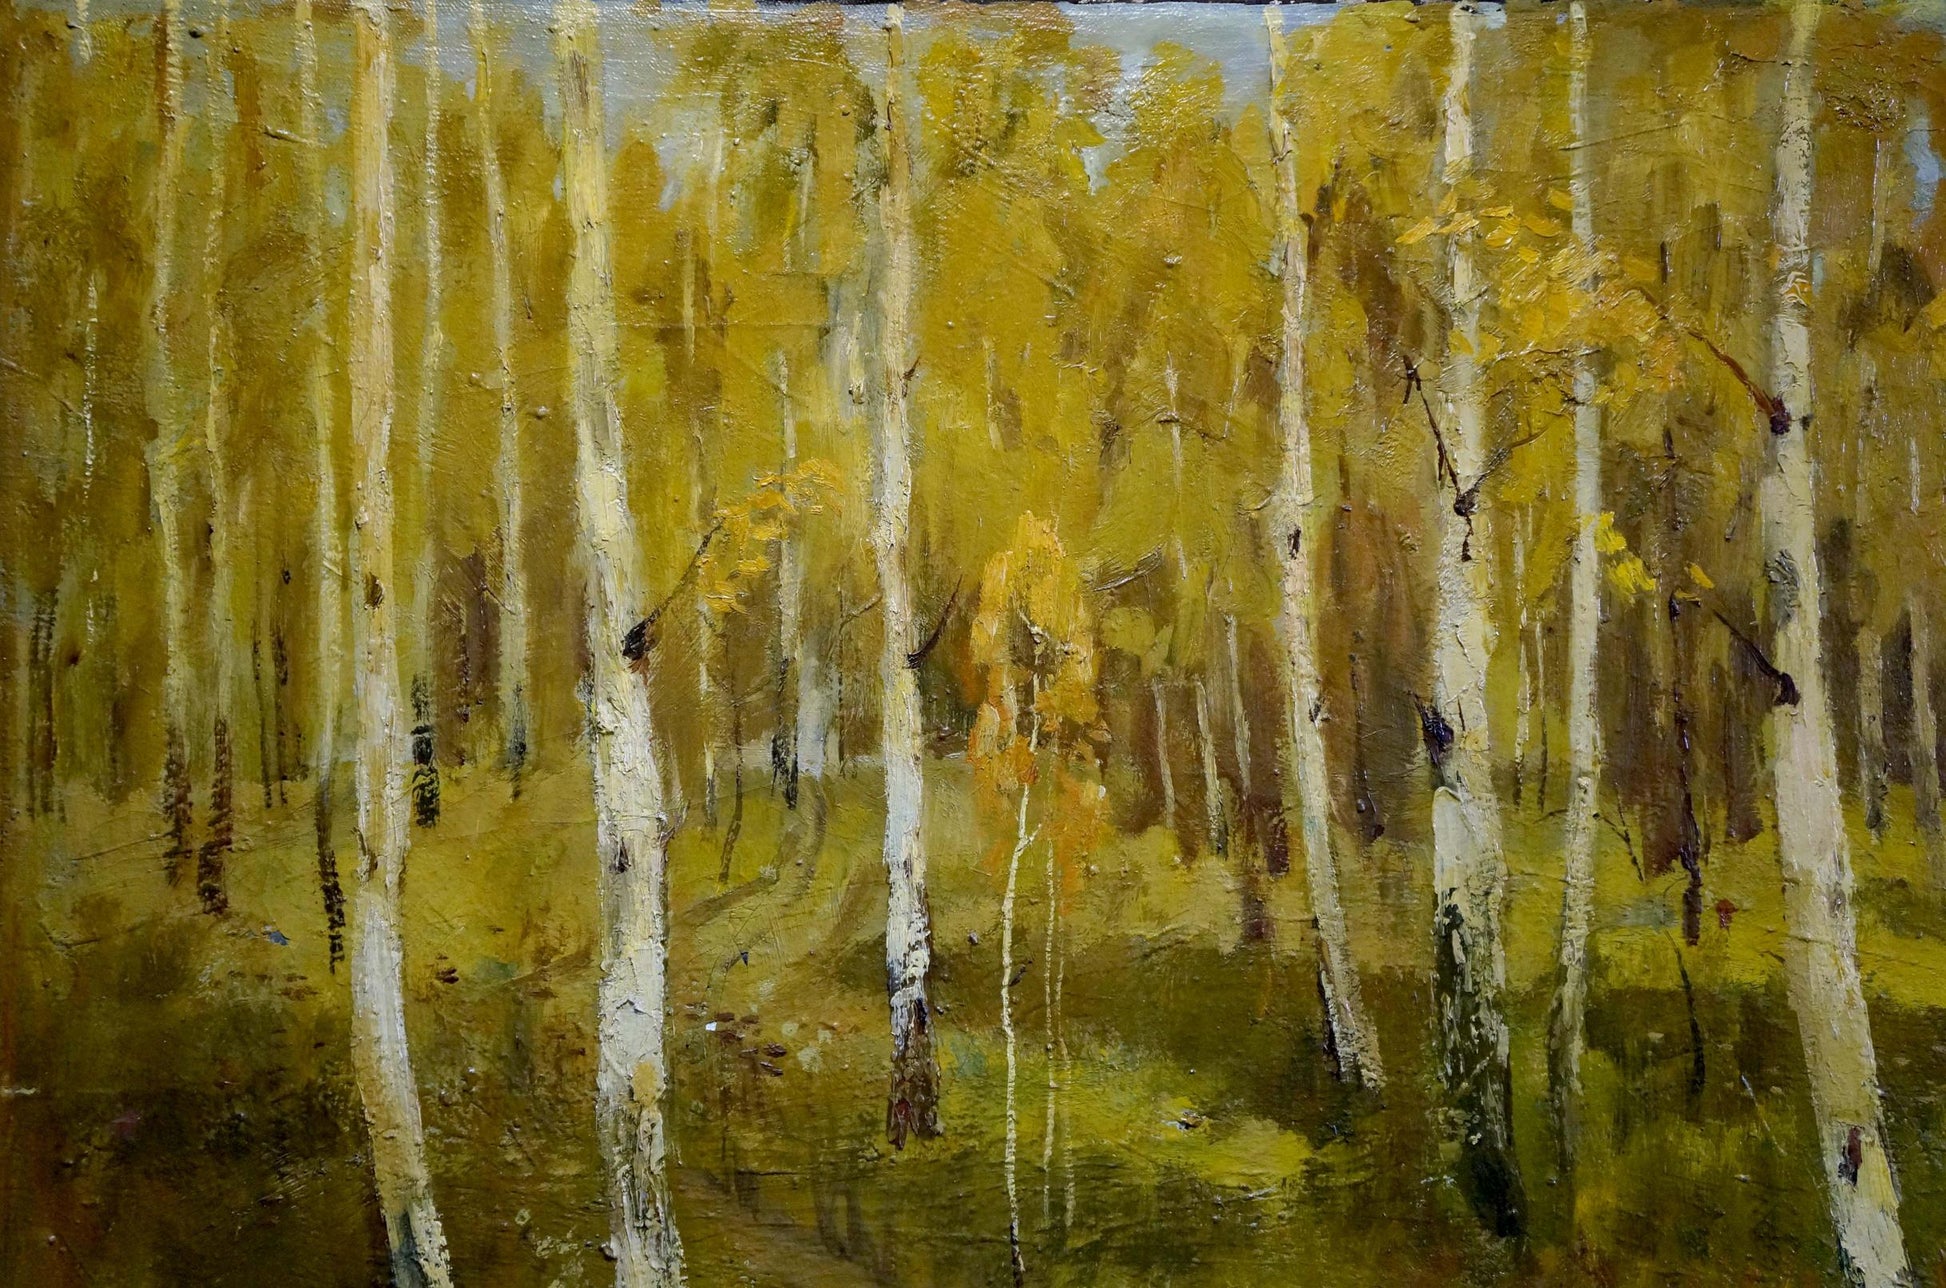 Birch woodland portrayed in an oil painting by Vladimir Ivanovich Fedorchenko